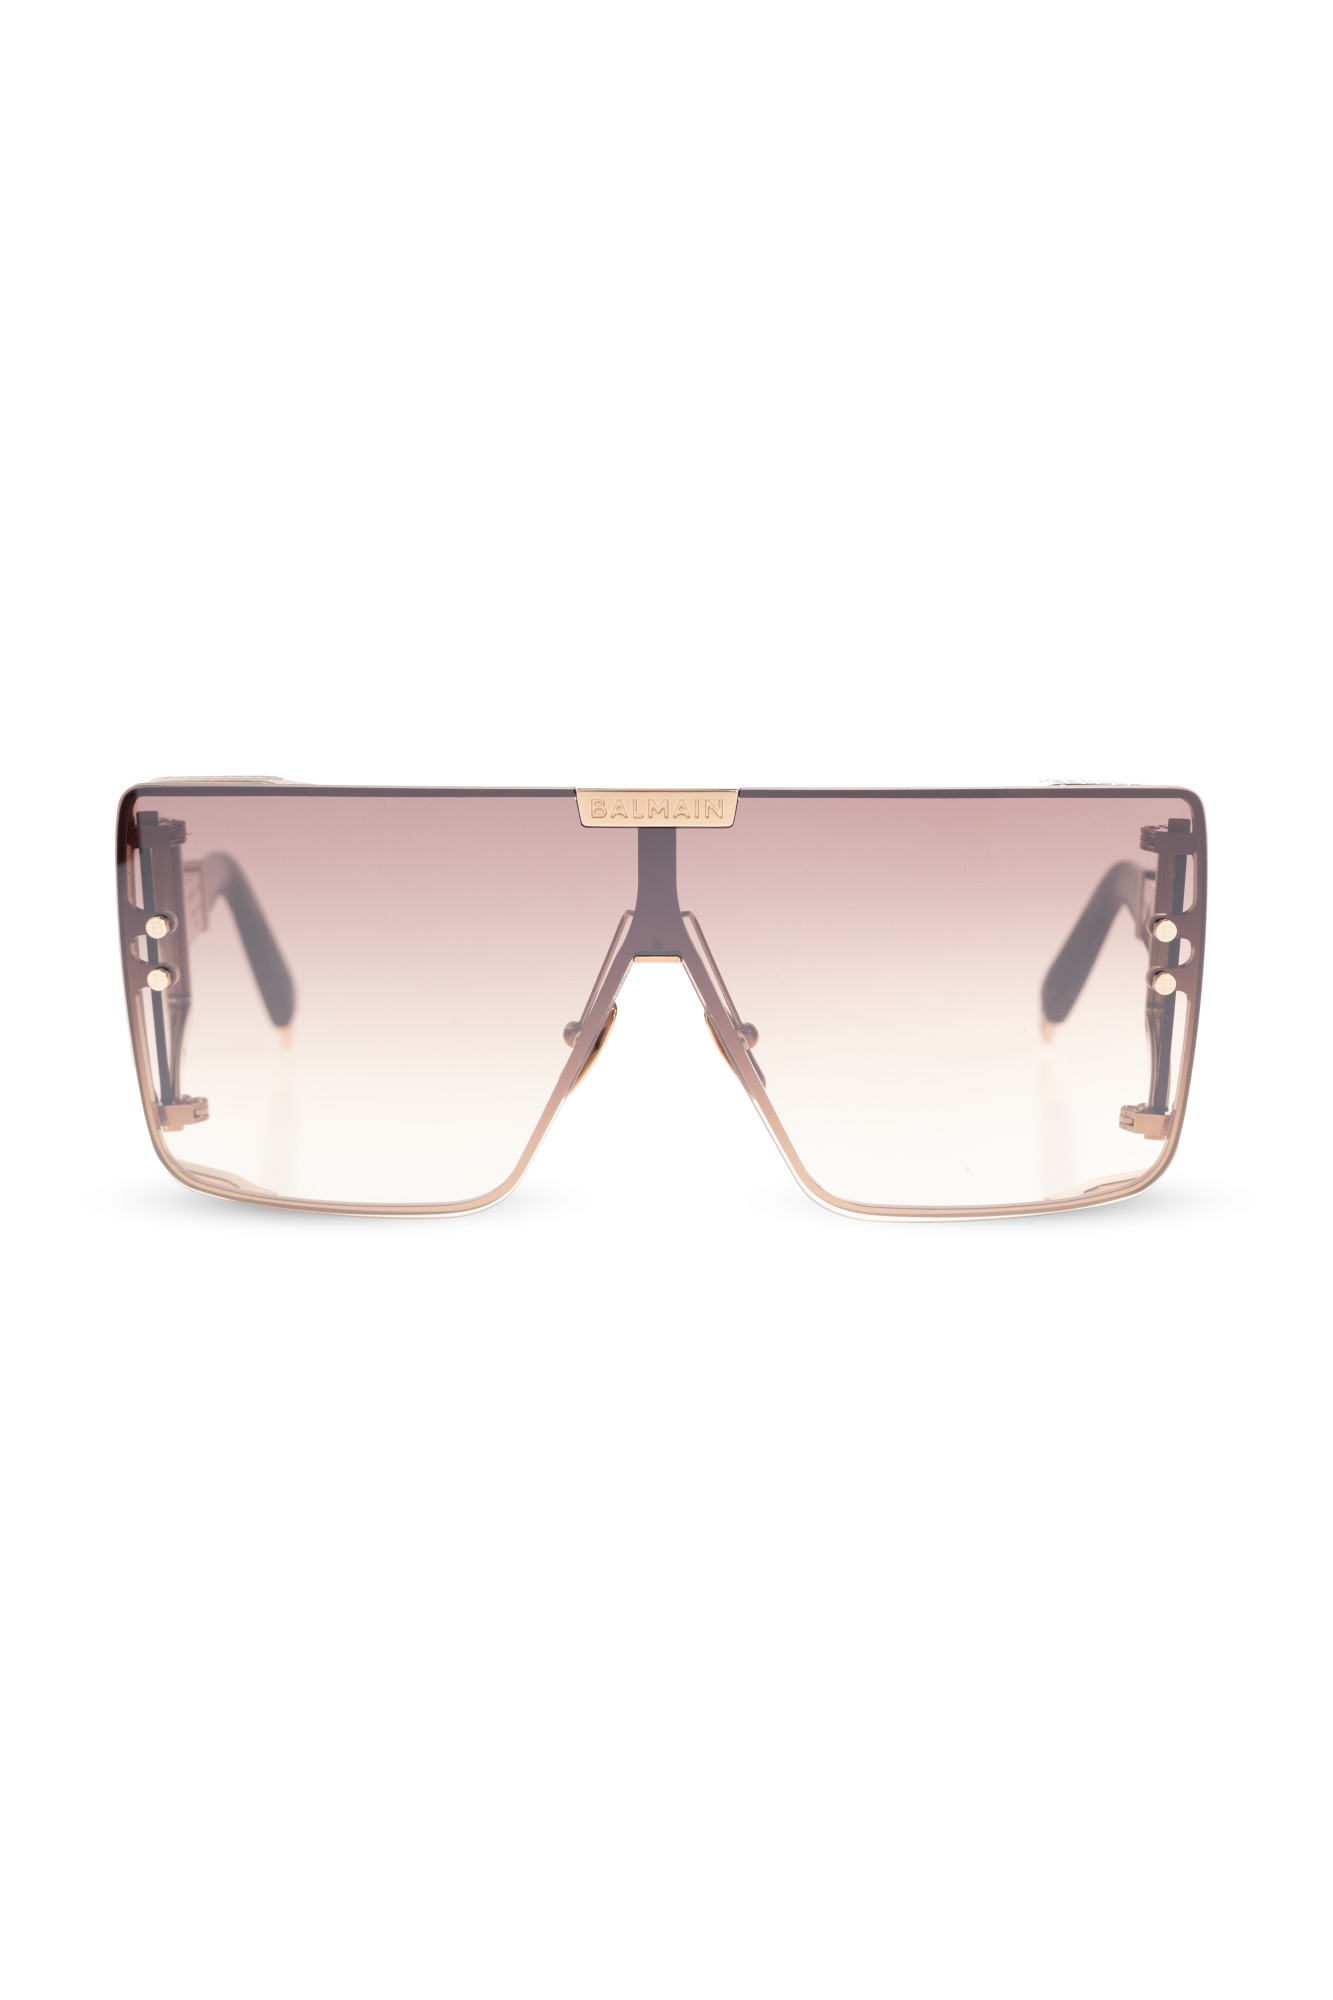 Balmain Sunglasses Canada Best Sale | website.jkuat.ac.ke